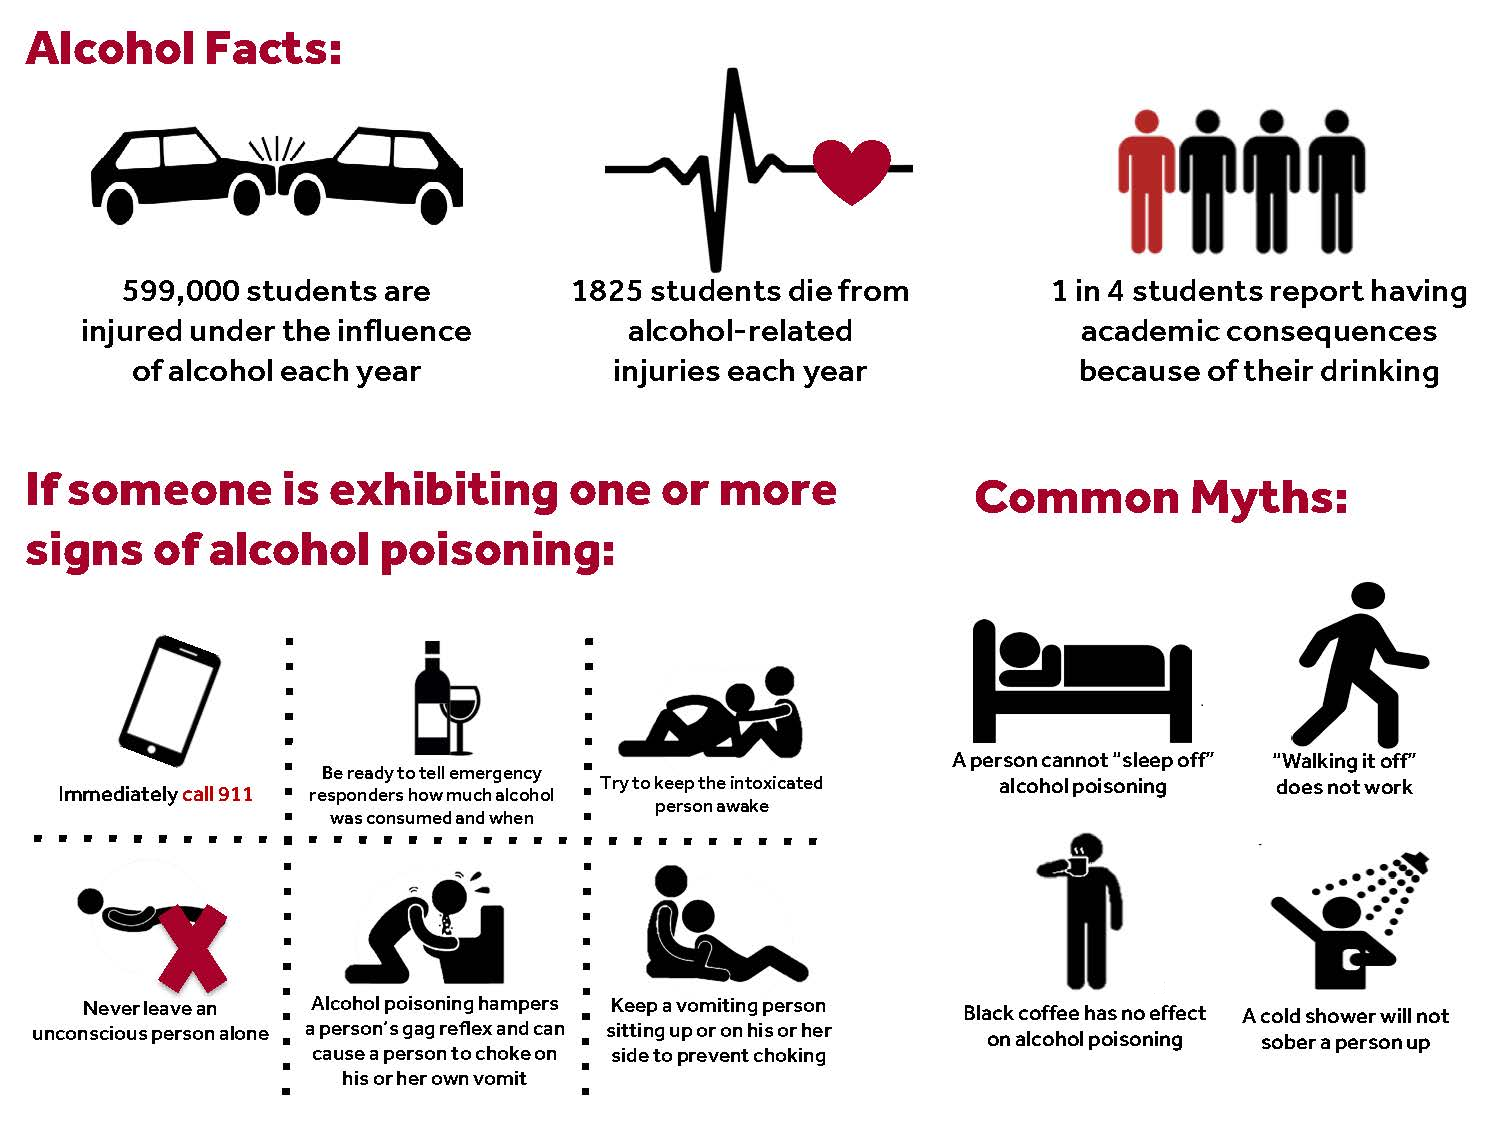 Alchohol Facts